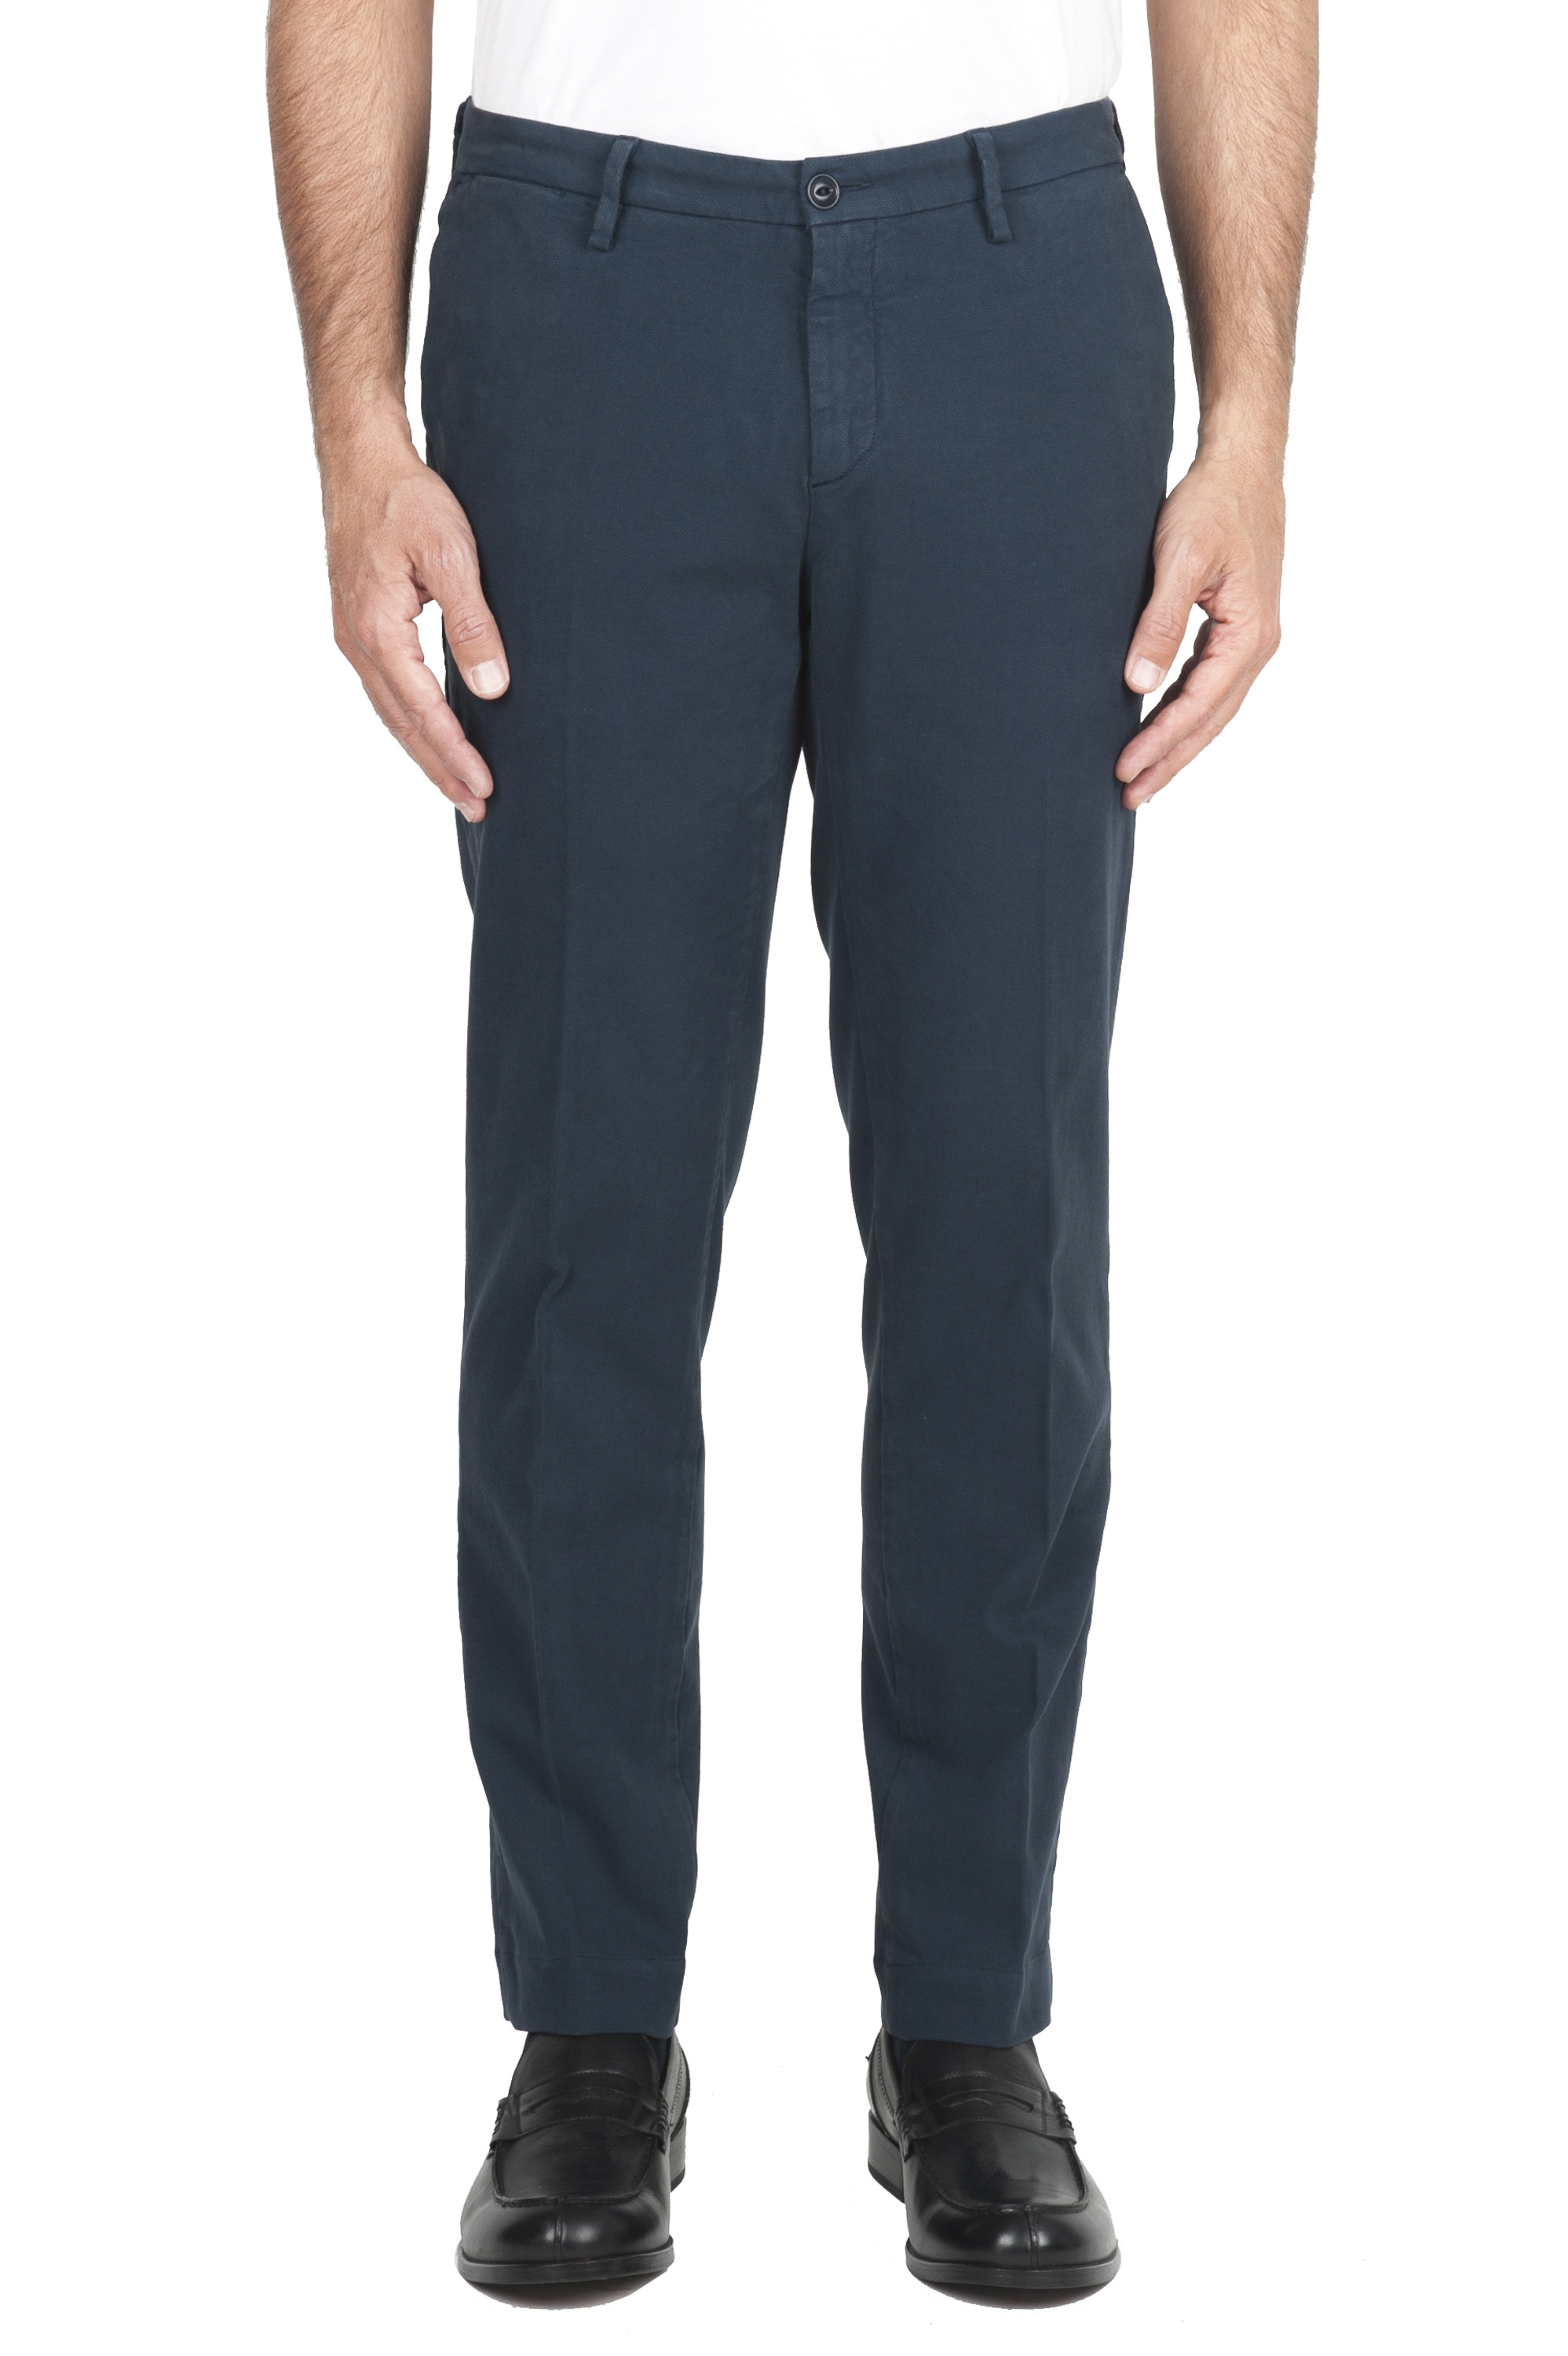 SBU 01544_19AW Pantalones chinos clásicos en algodón elástico azul 01